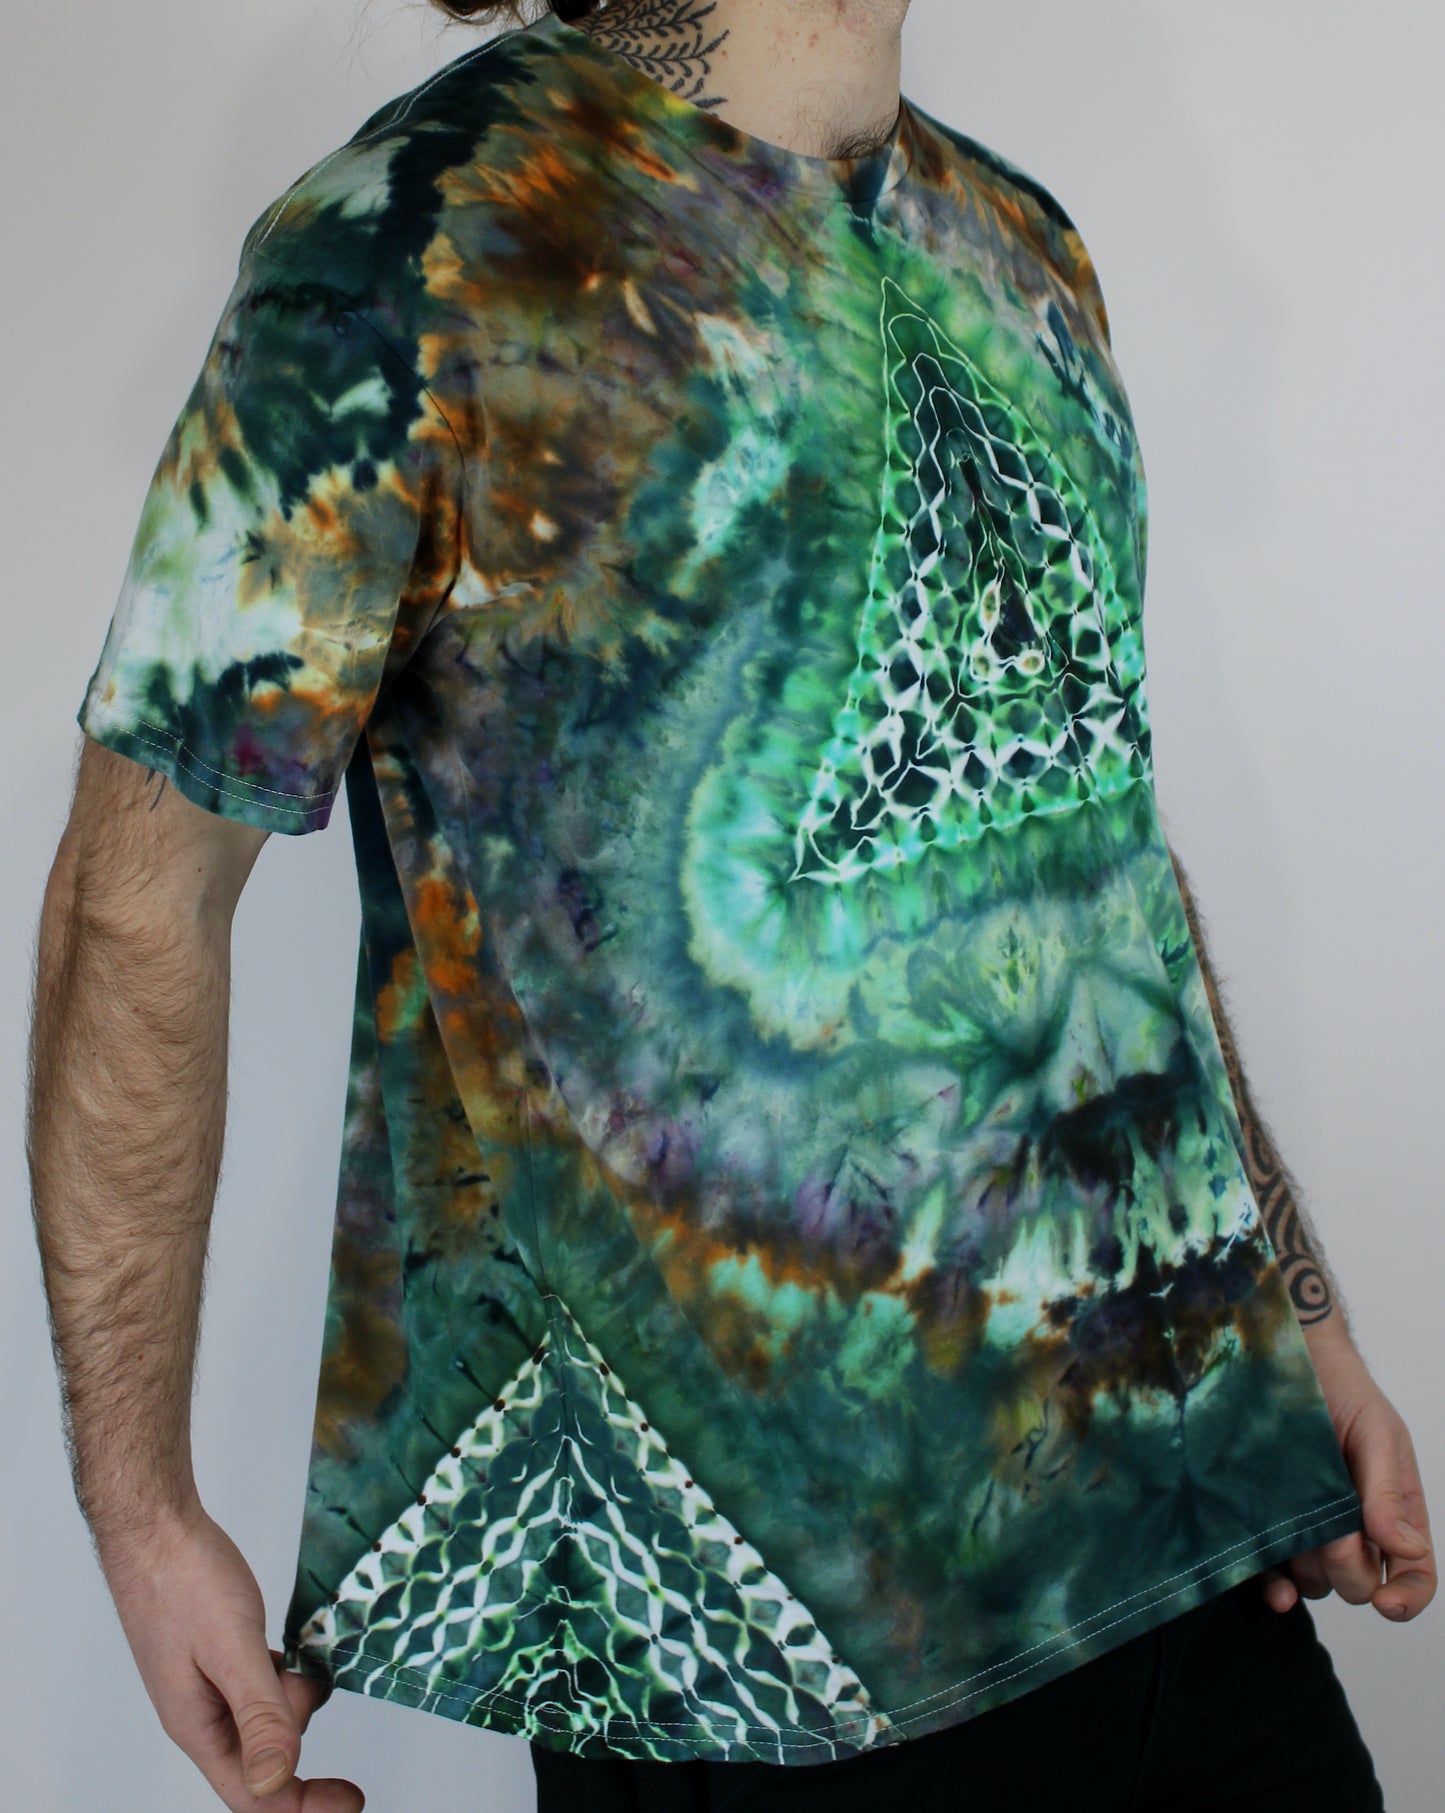 XL - “Pyramid Elves” Tee Shirt